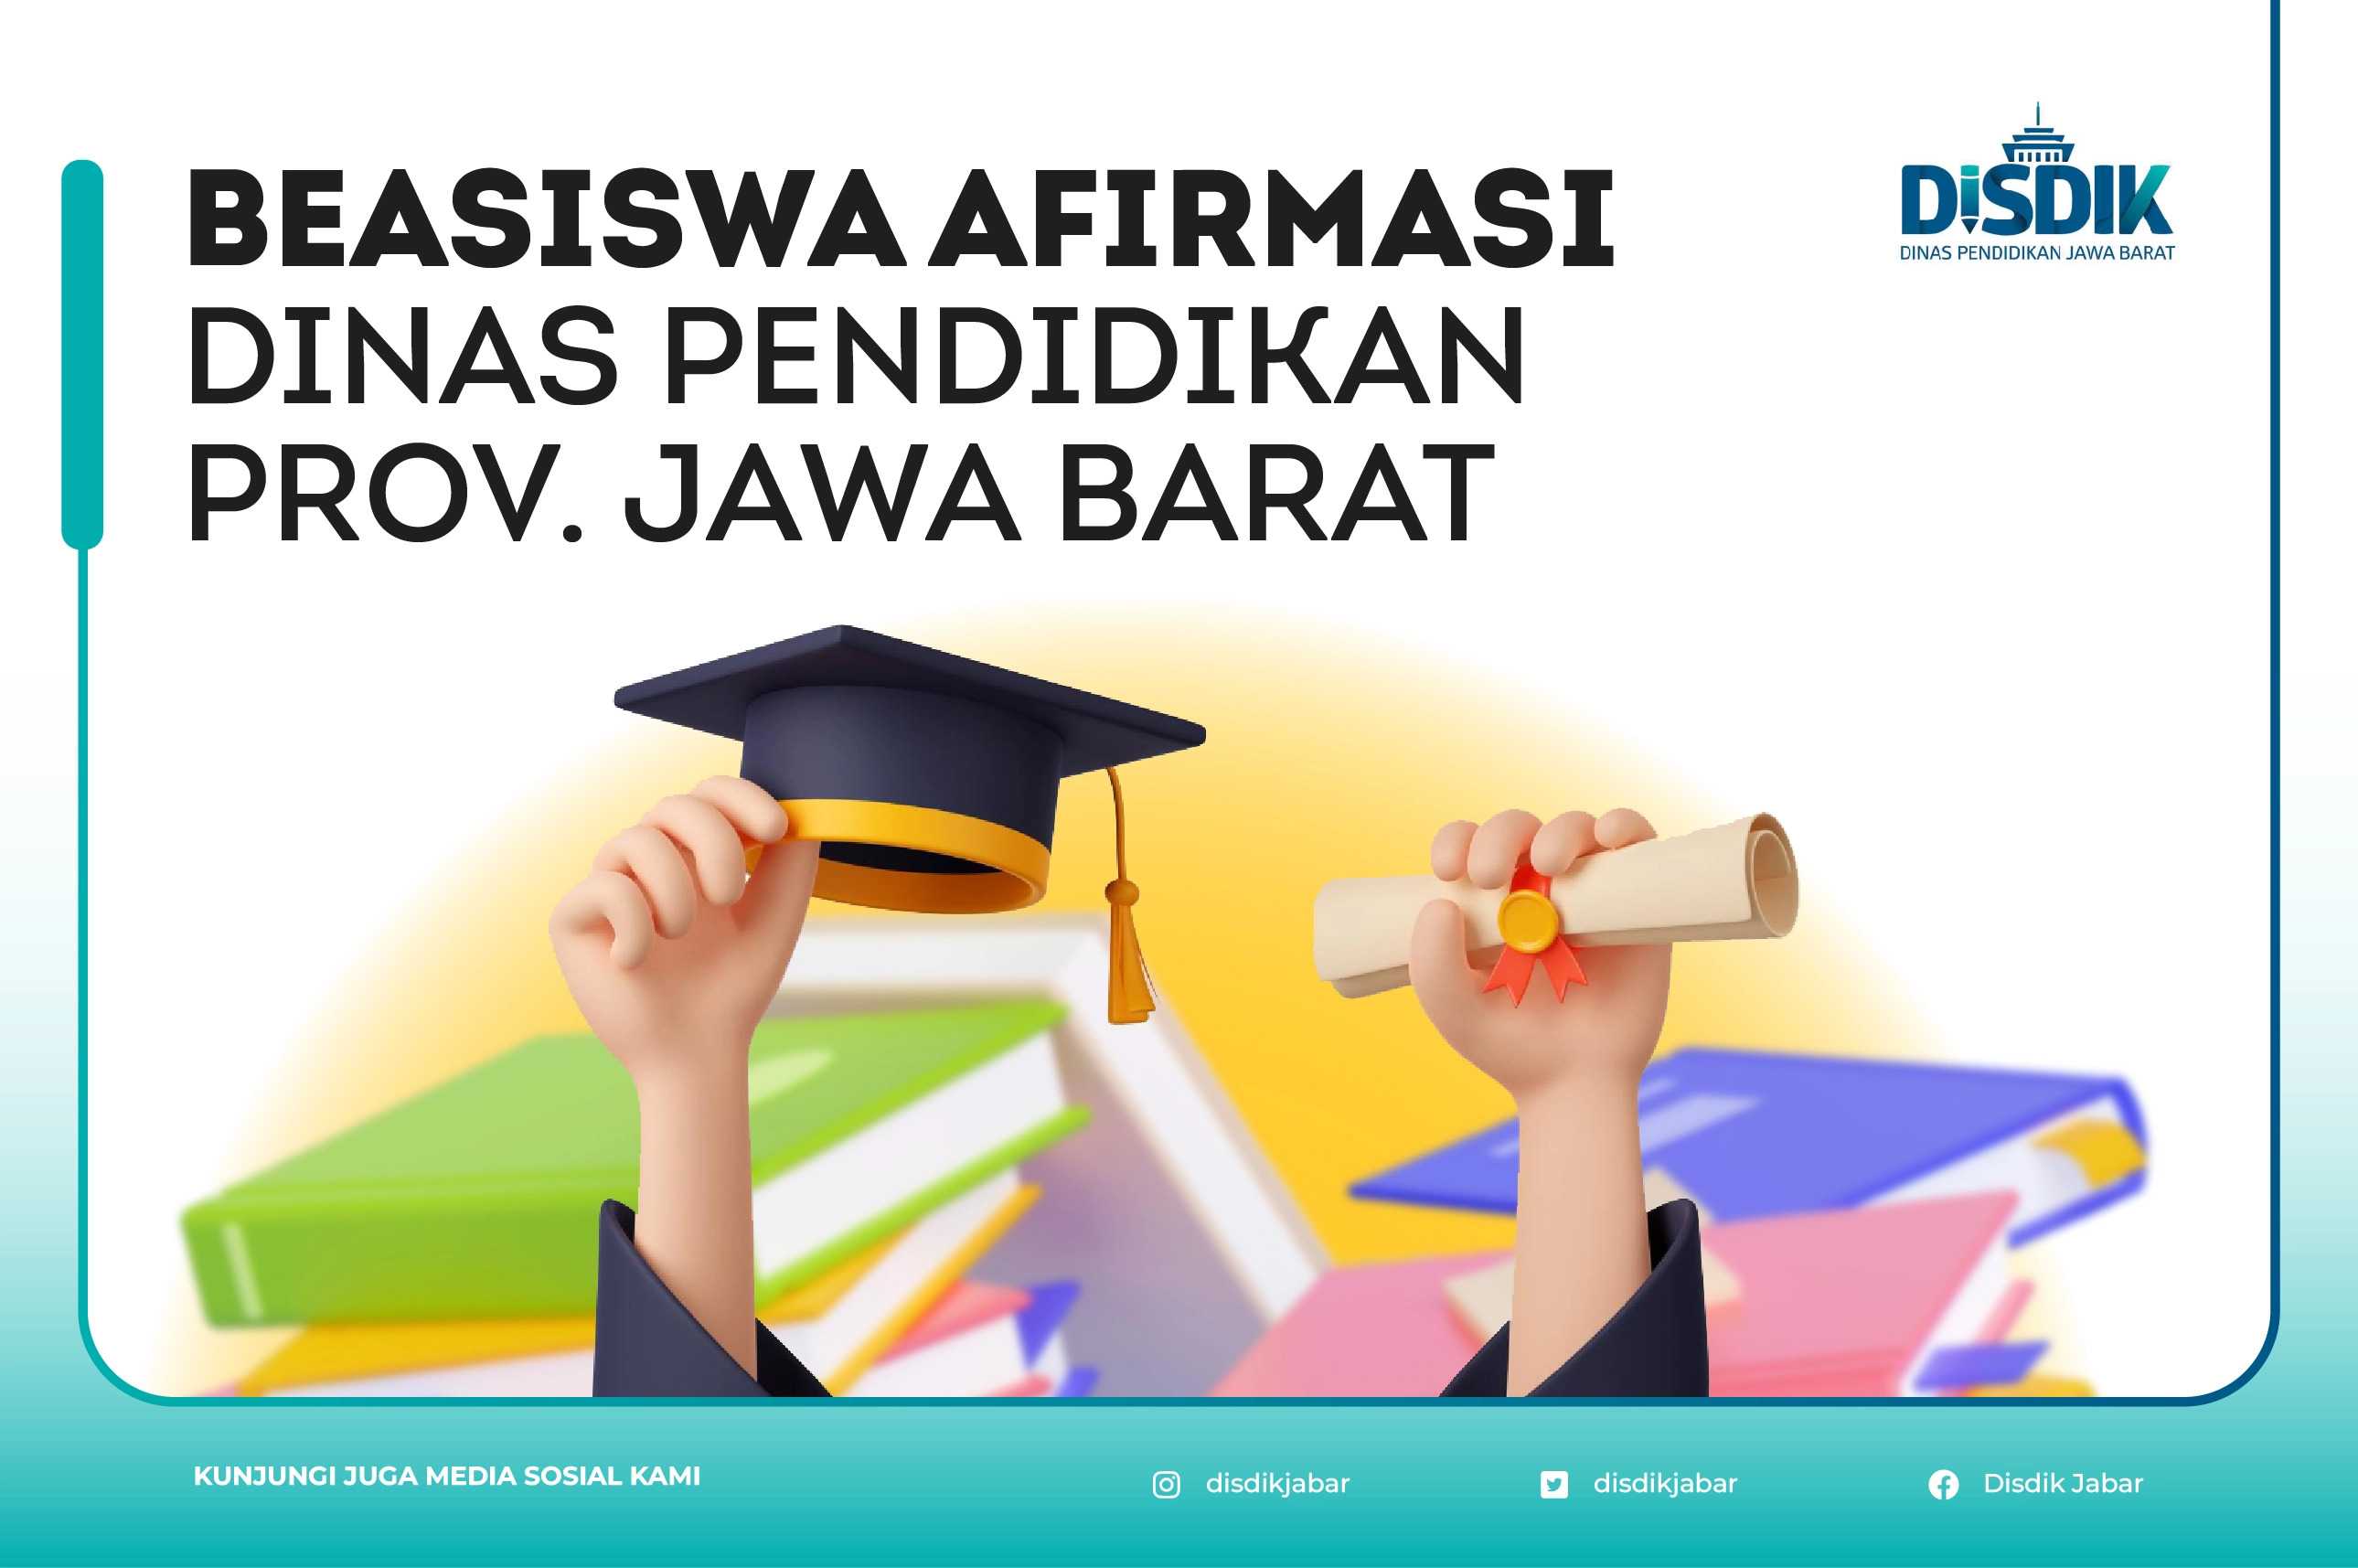 Beasiswa Afirmasi Dinas Pendidikan Jawa Barat Tutup Hingga 14 September